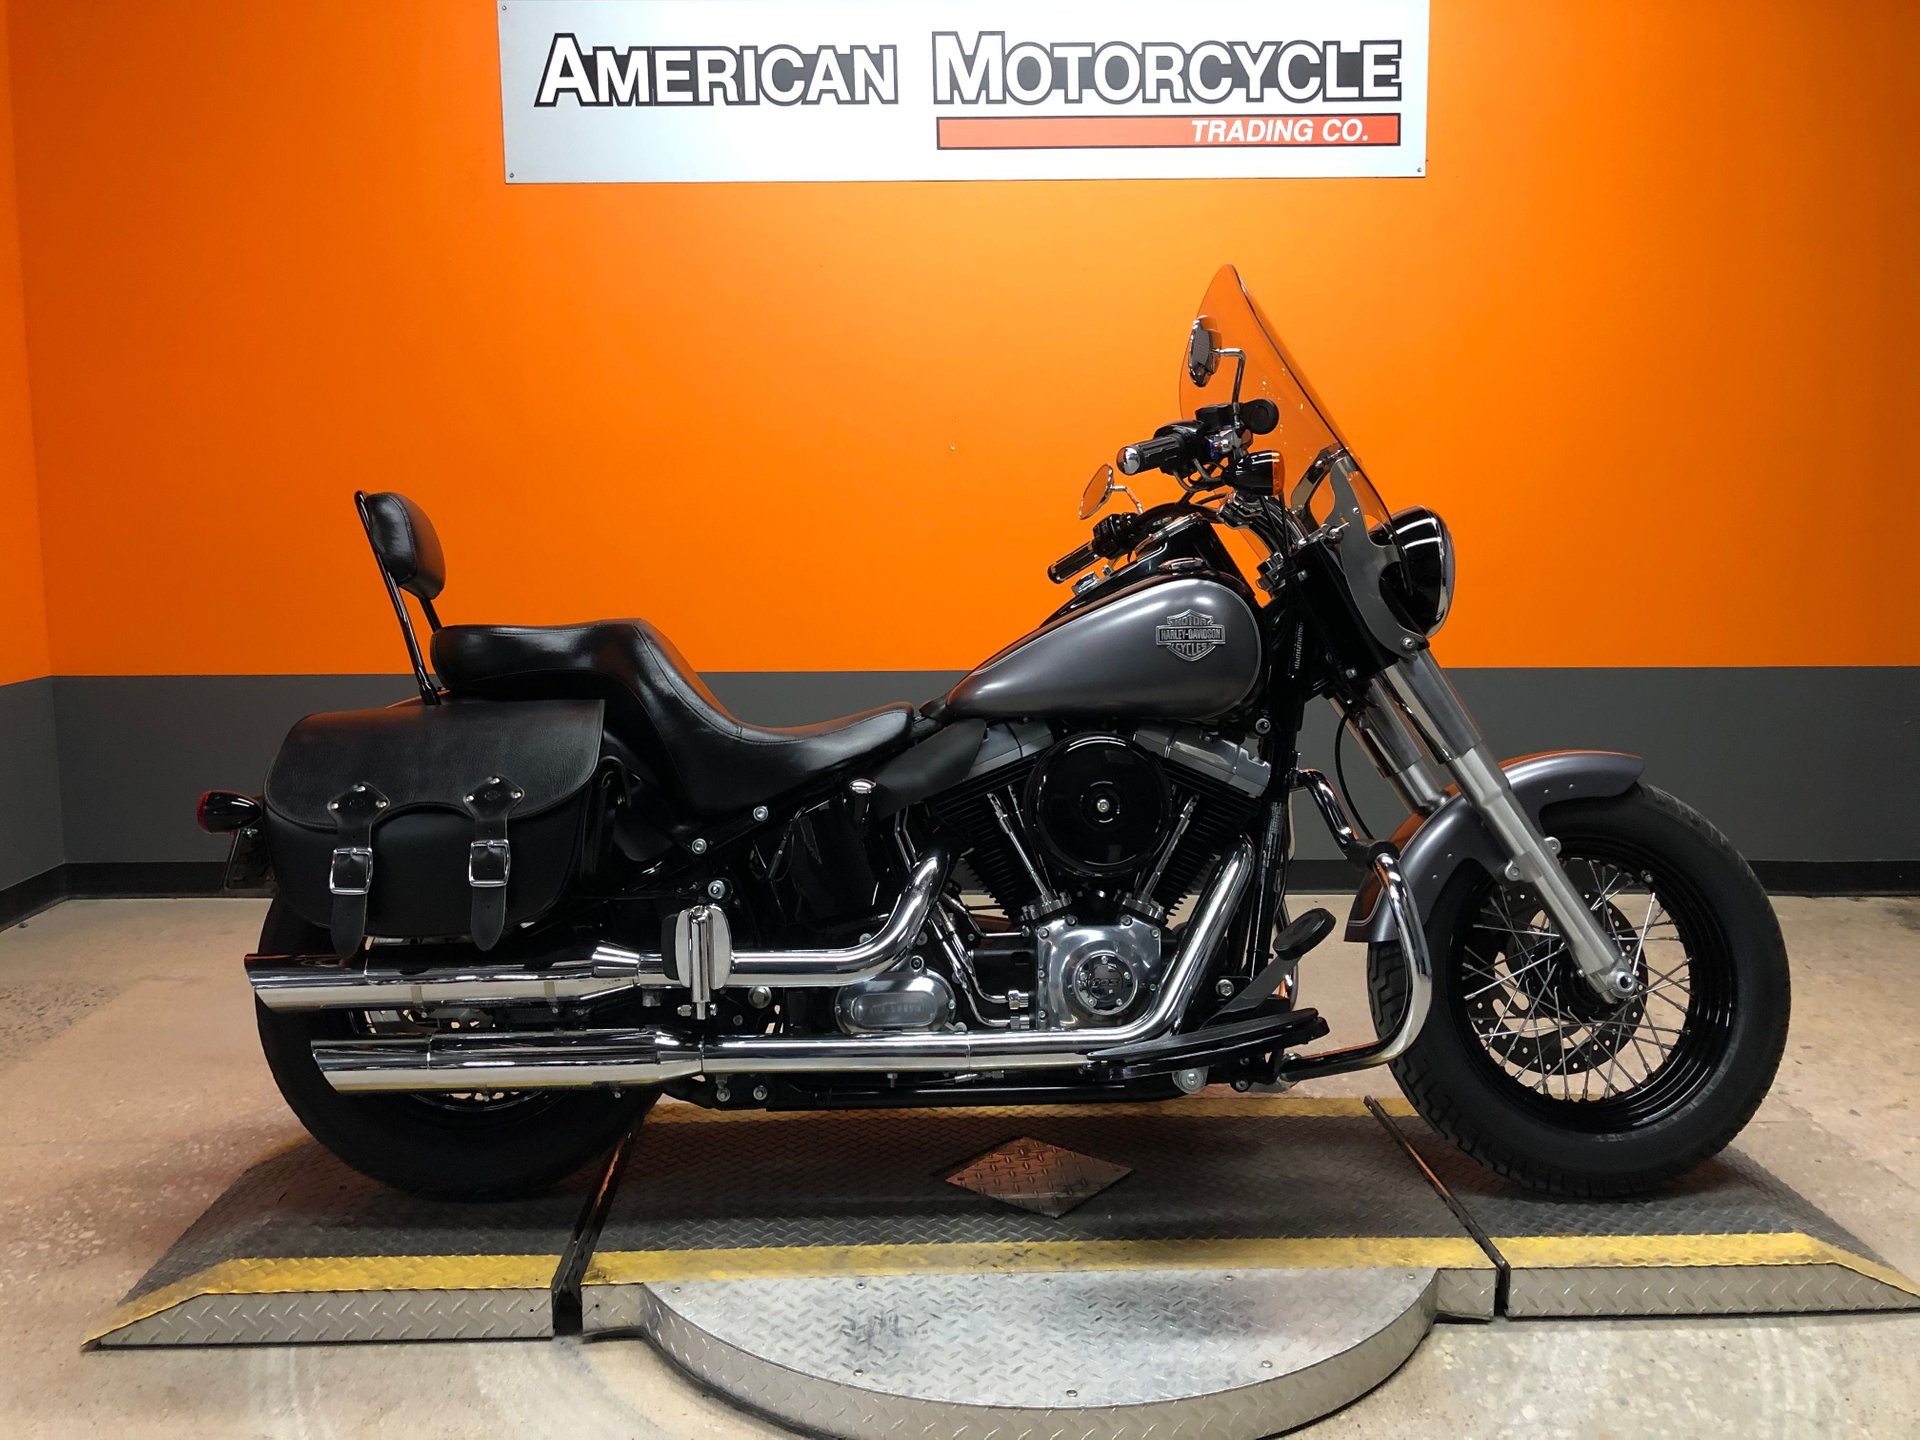 2015 Harley Davidson Softail Slim American Motorcycle Trading Company Used Harley Davidson Motorcycles